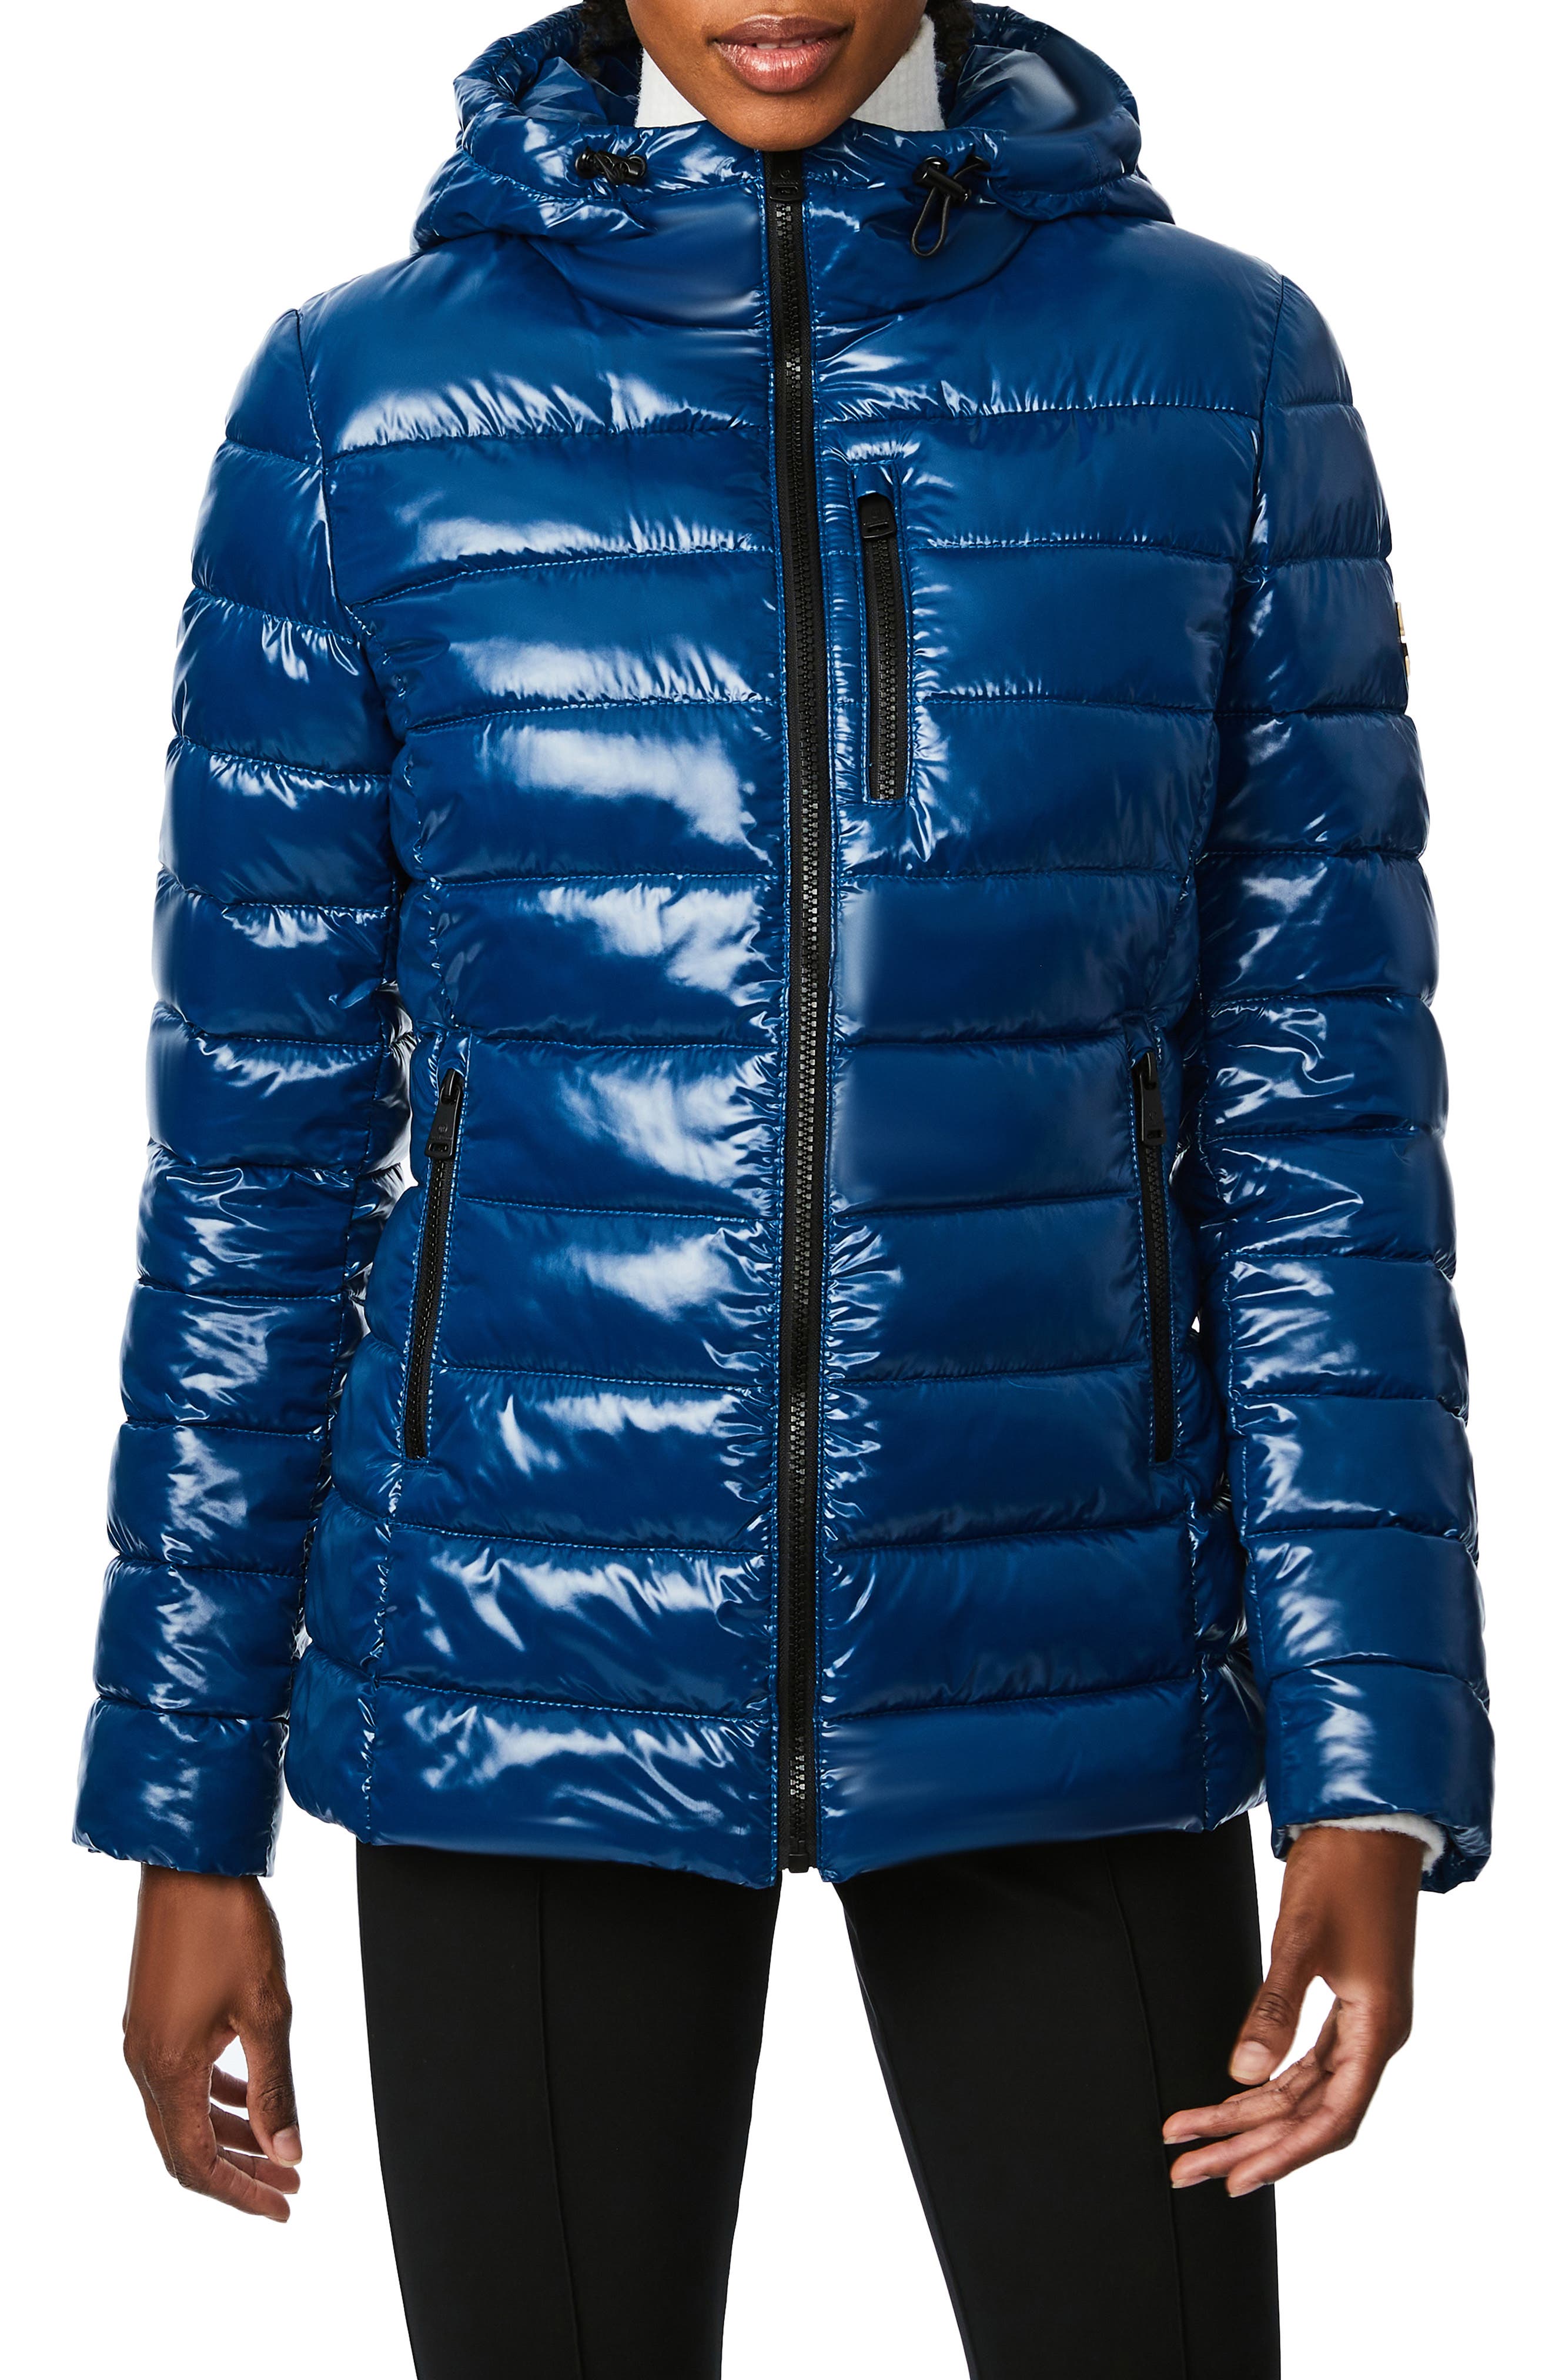 blue puffer jacket women's